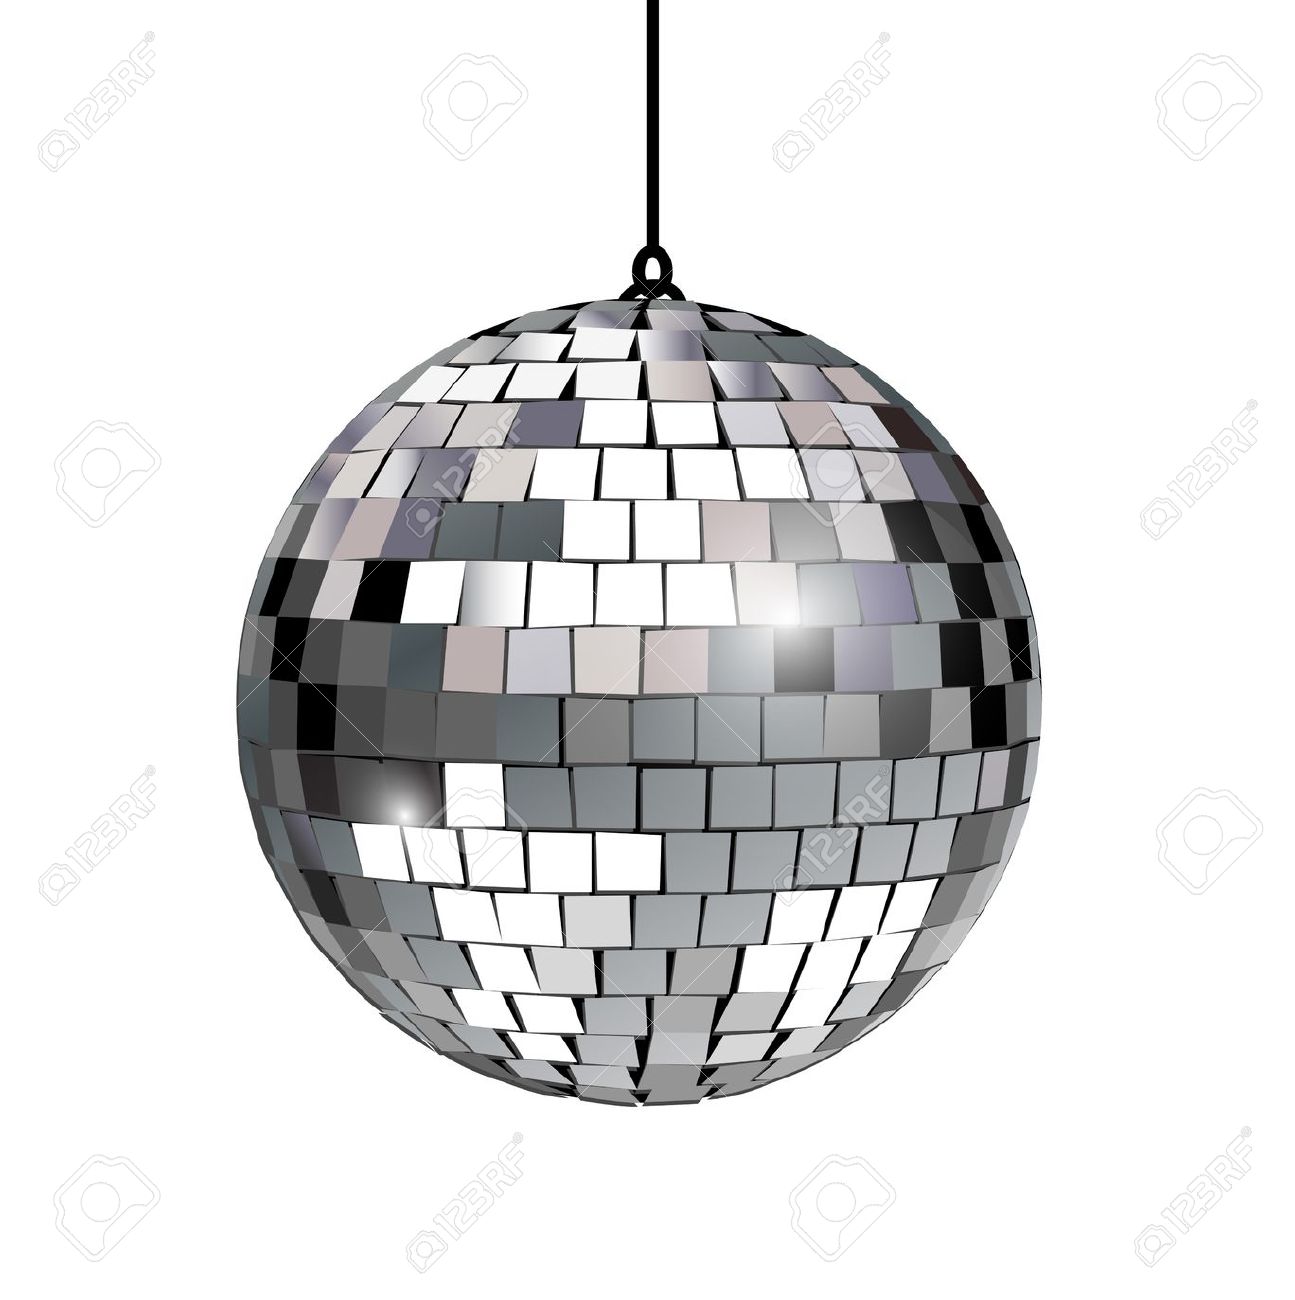 disco ball isolated: disco .